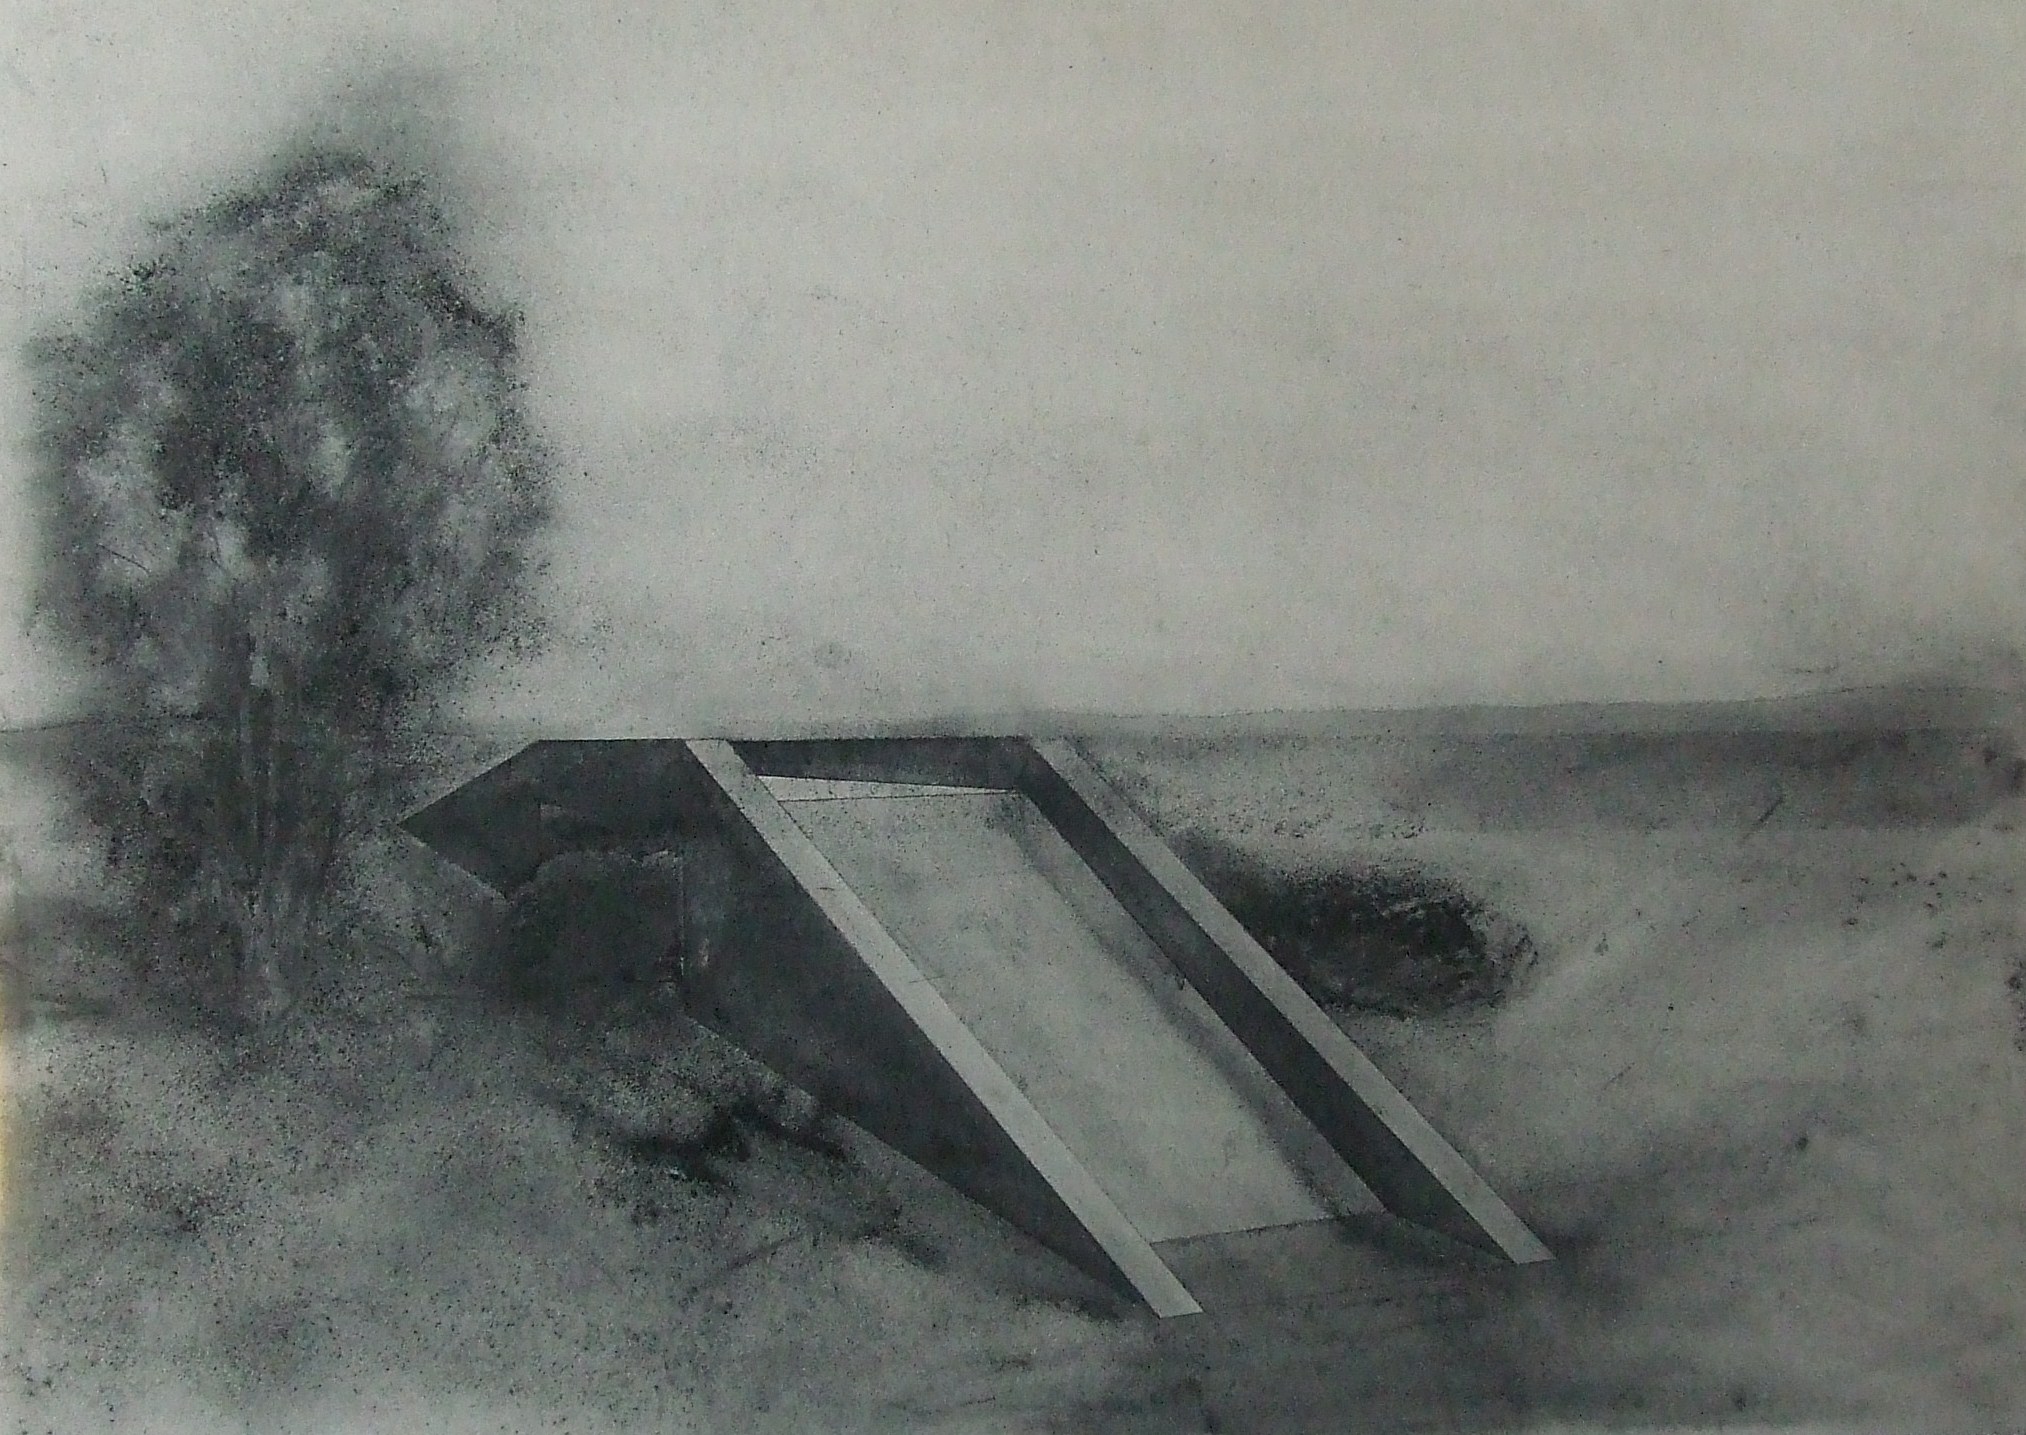 Nadjezd přes křoví, 2009, uhel na papíře, 70x100cm